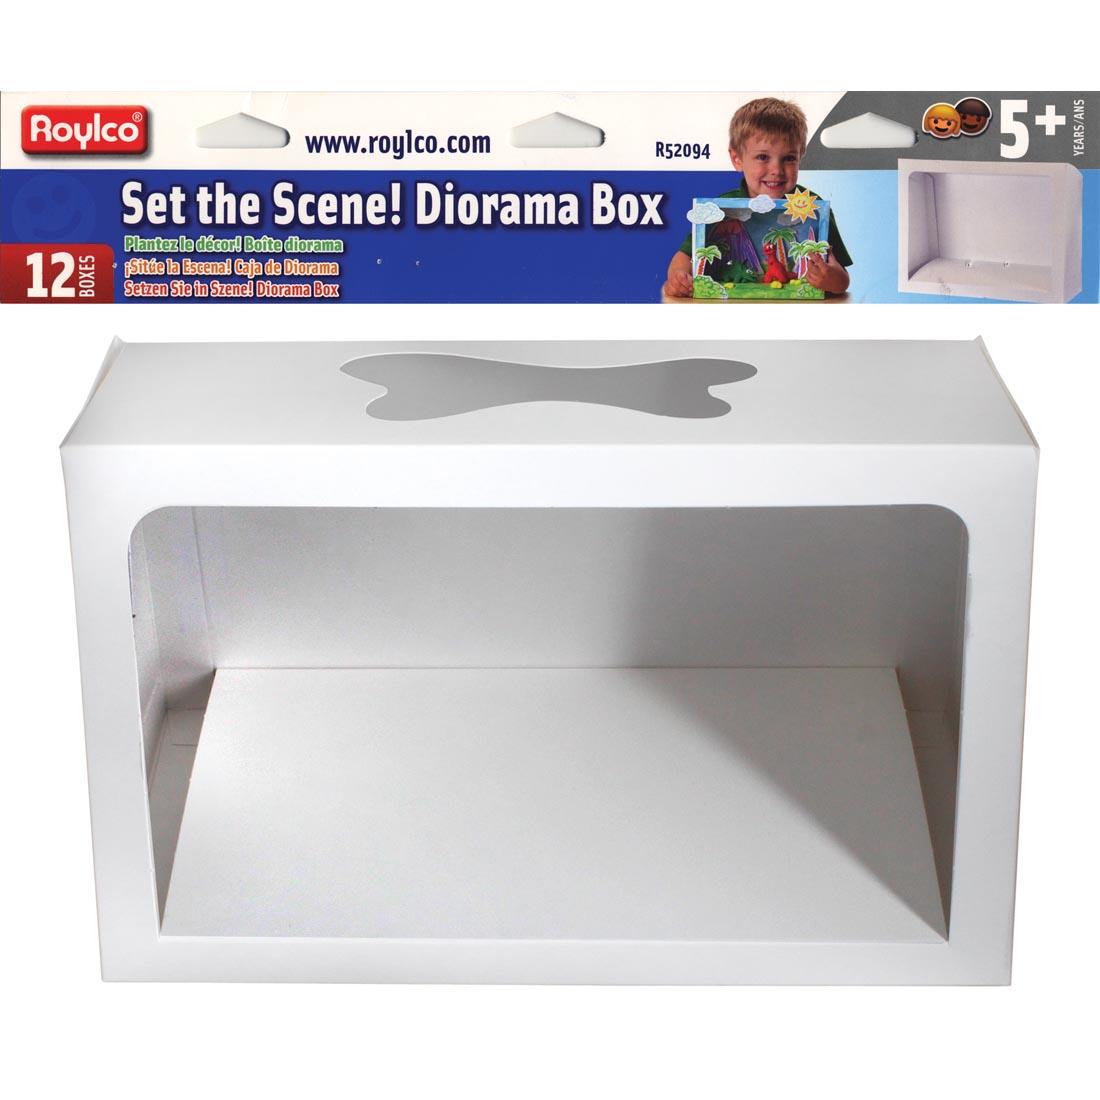 Roylco Set the Scene! Diorama Box